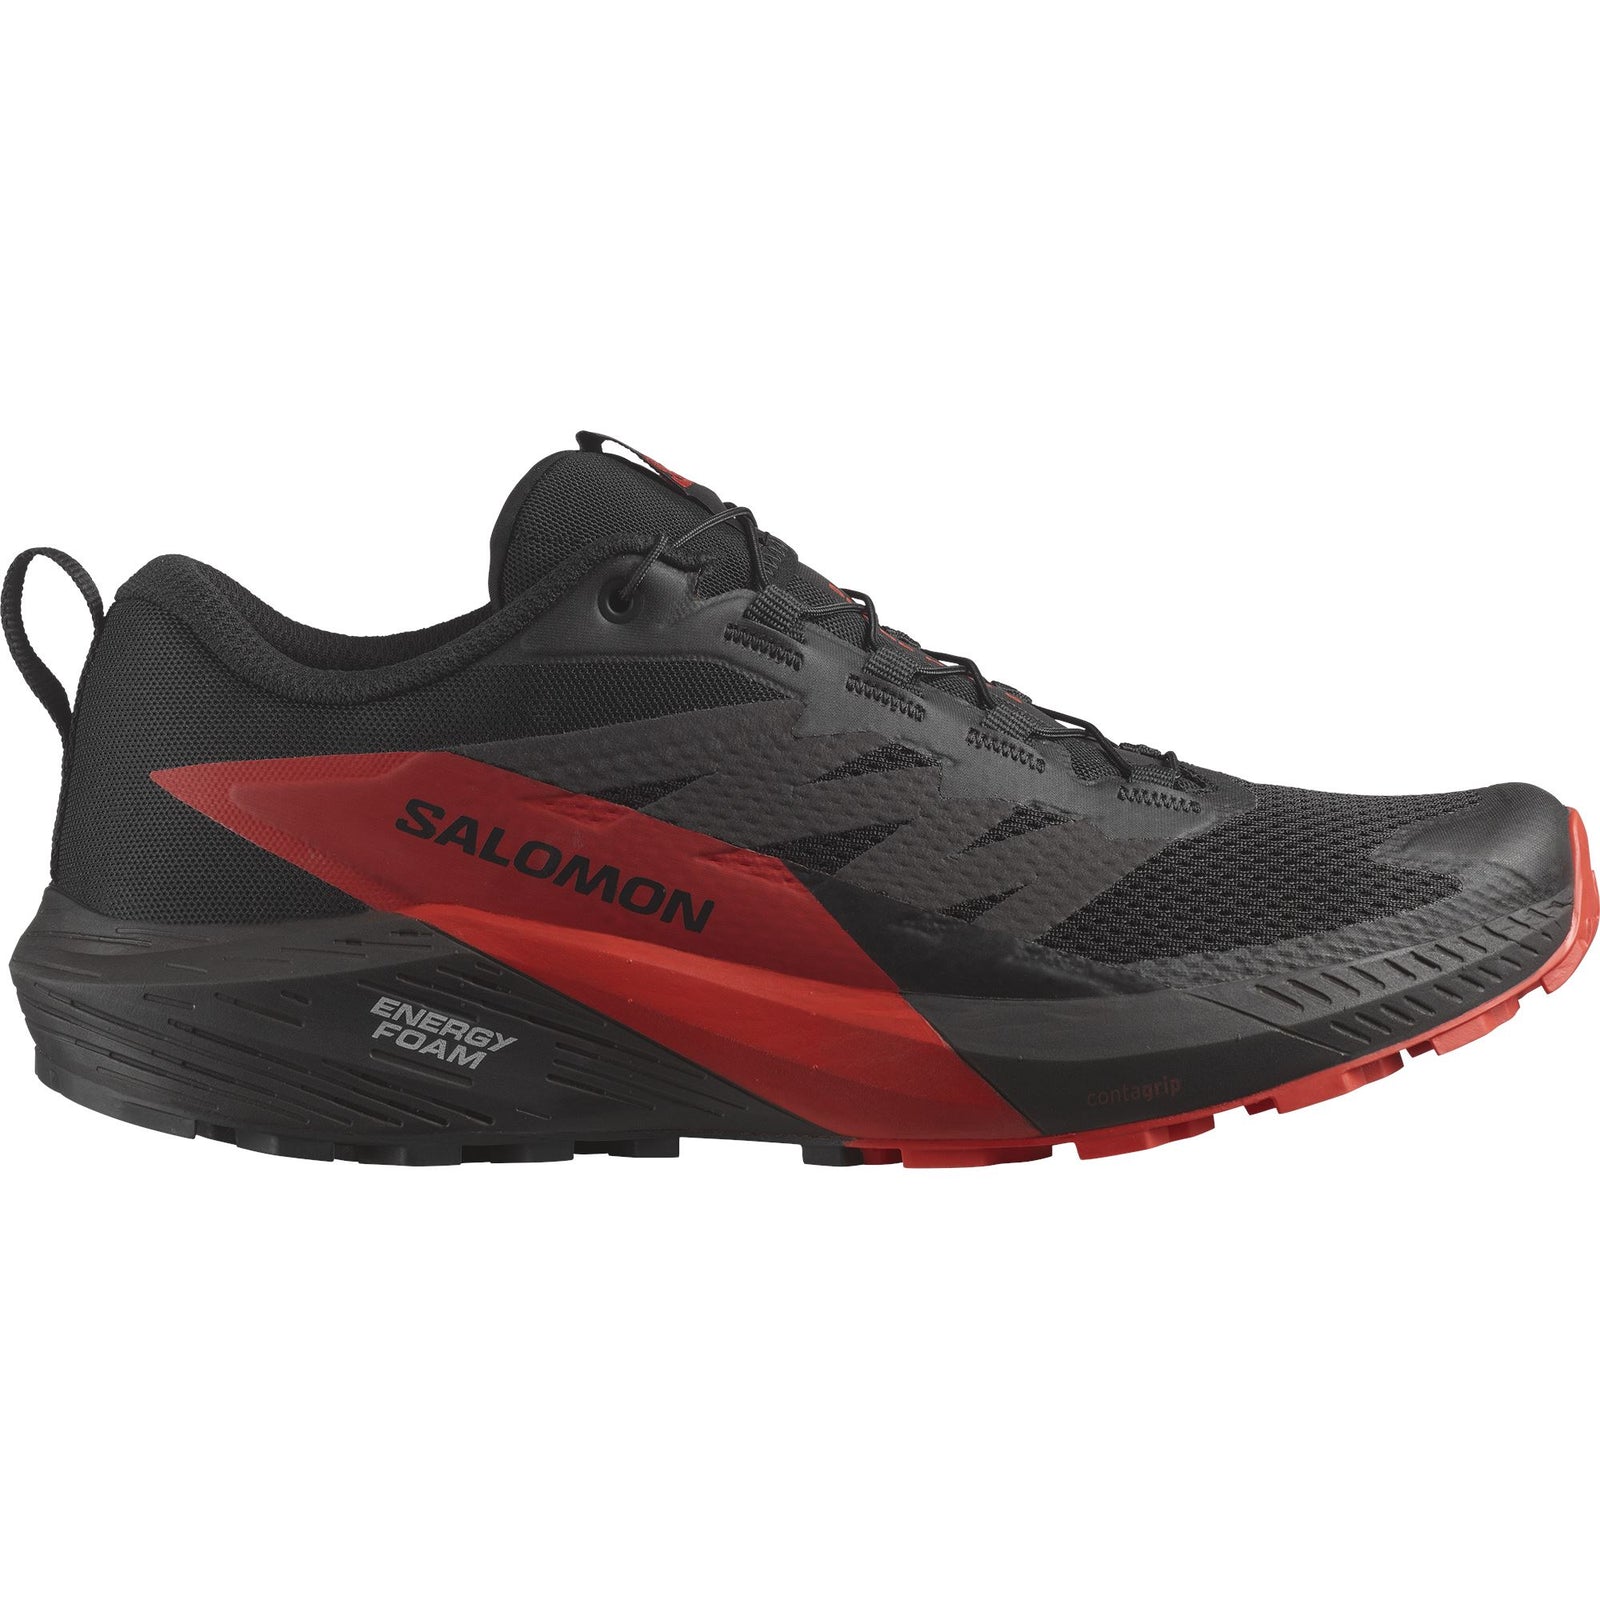 Salomon Sense Ride 5 Men's Trail Running Shoes Black / Fiery Red / Black US 9 